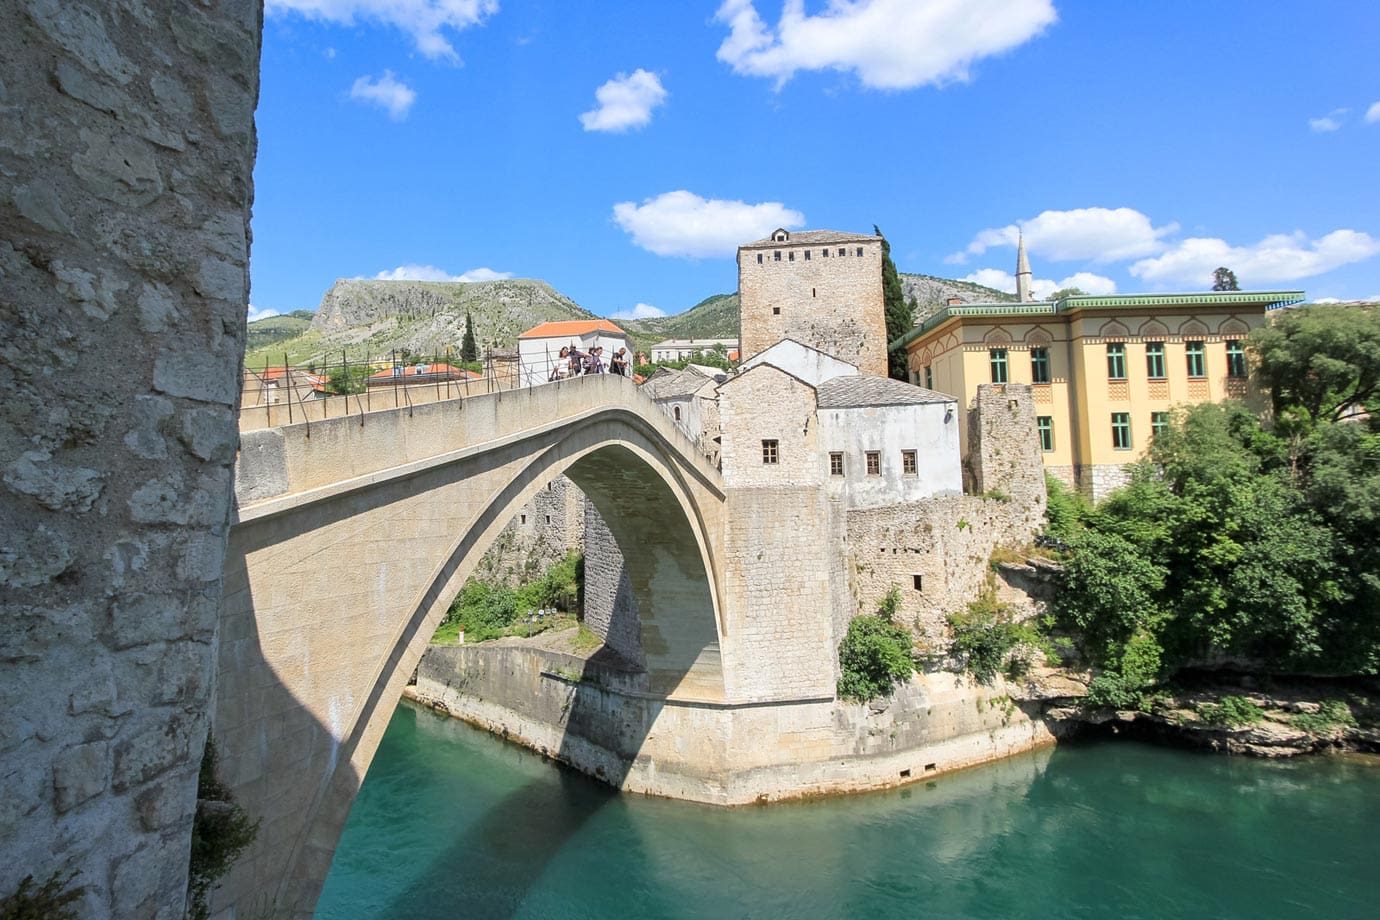 Photos of Mostar bridge, Bosnia.